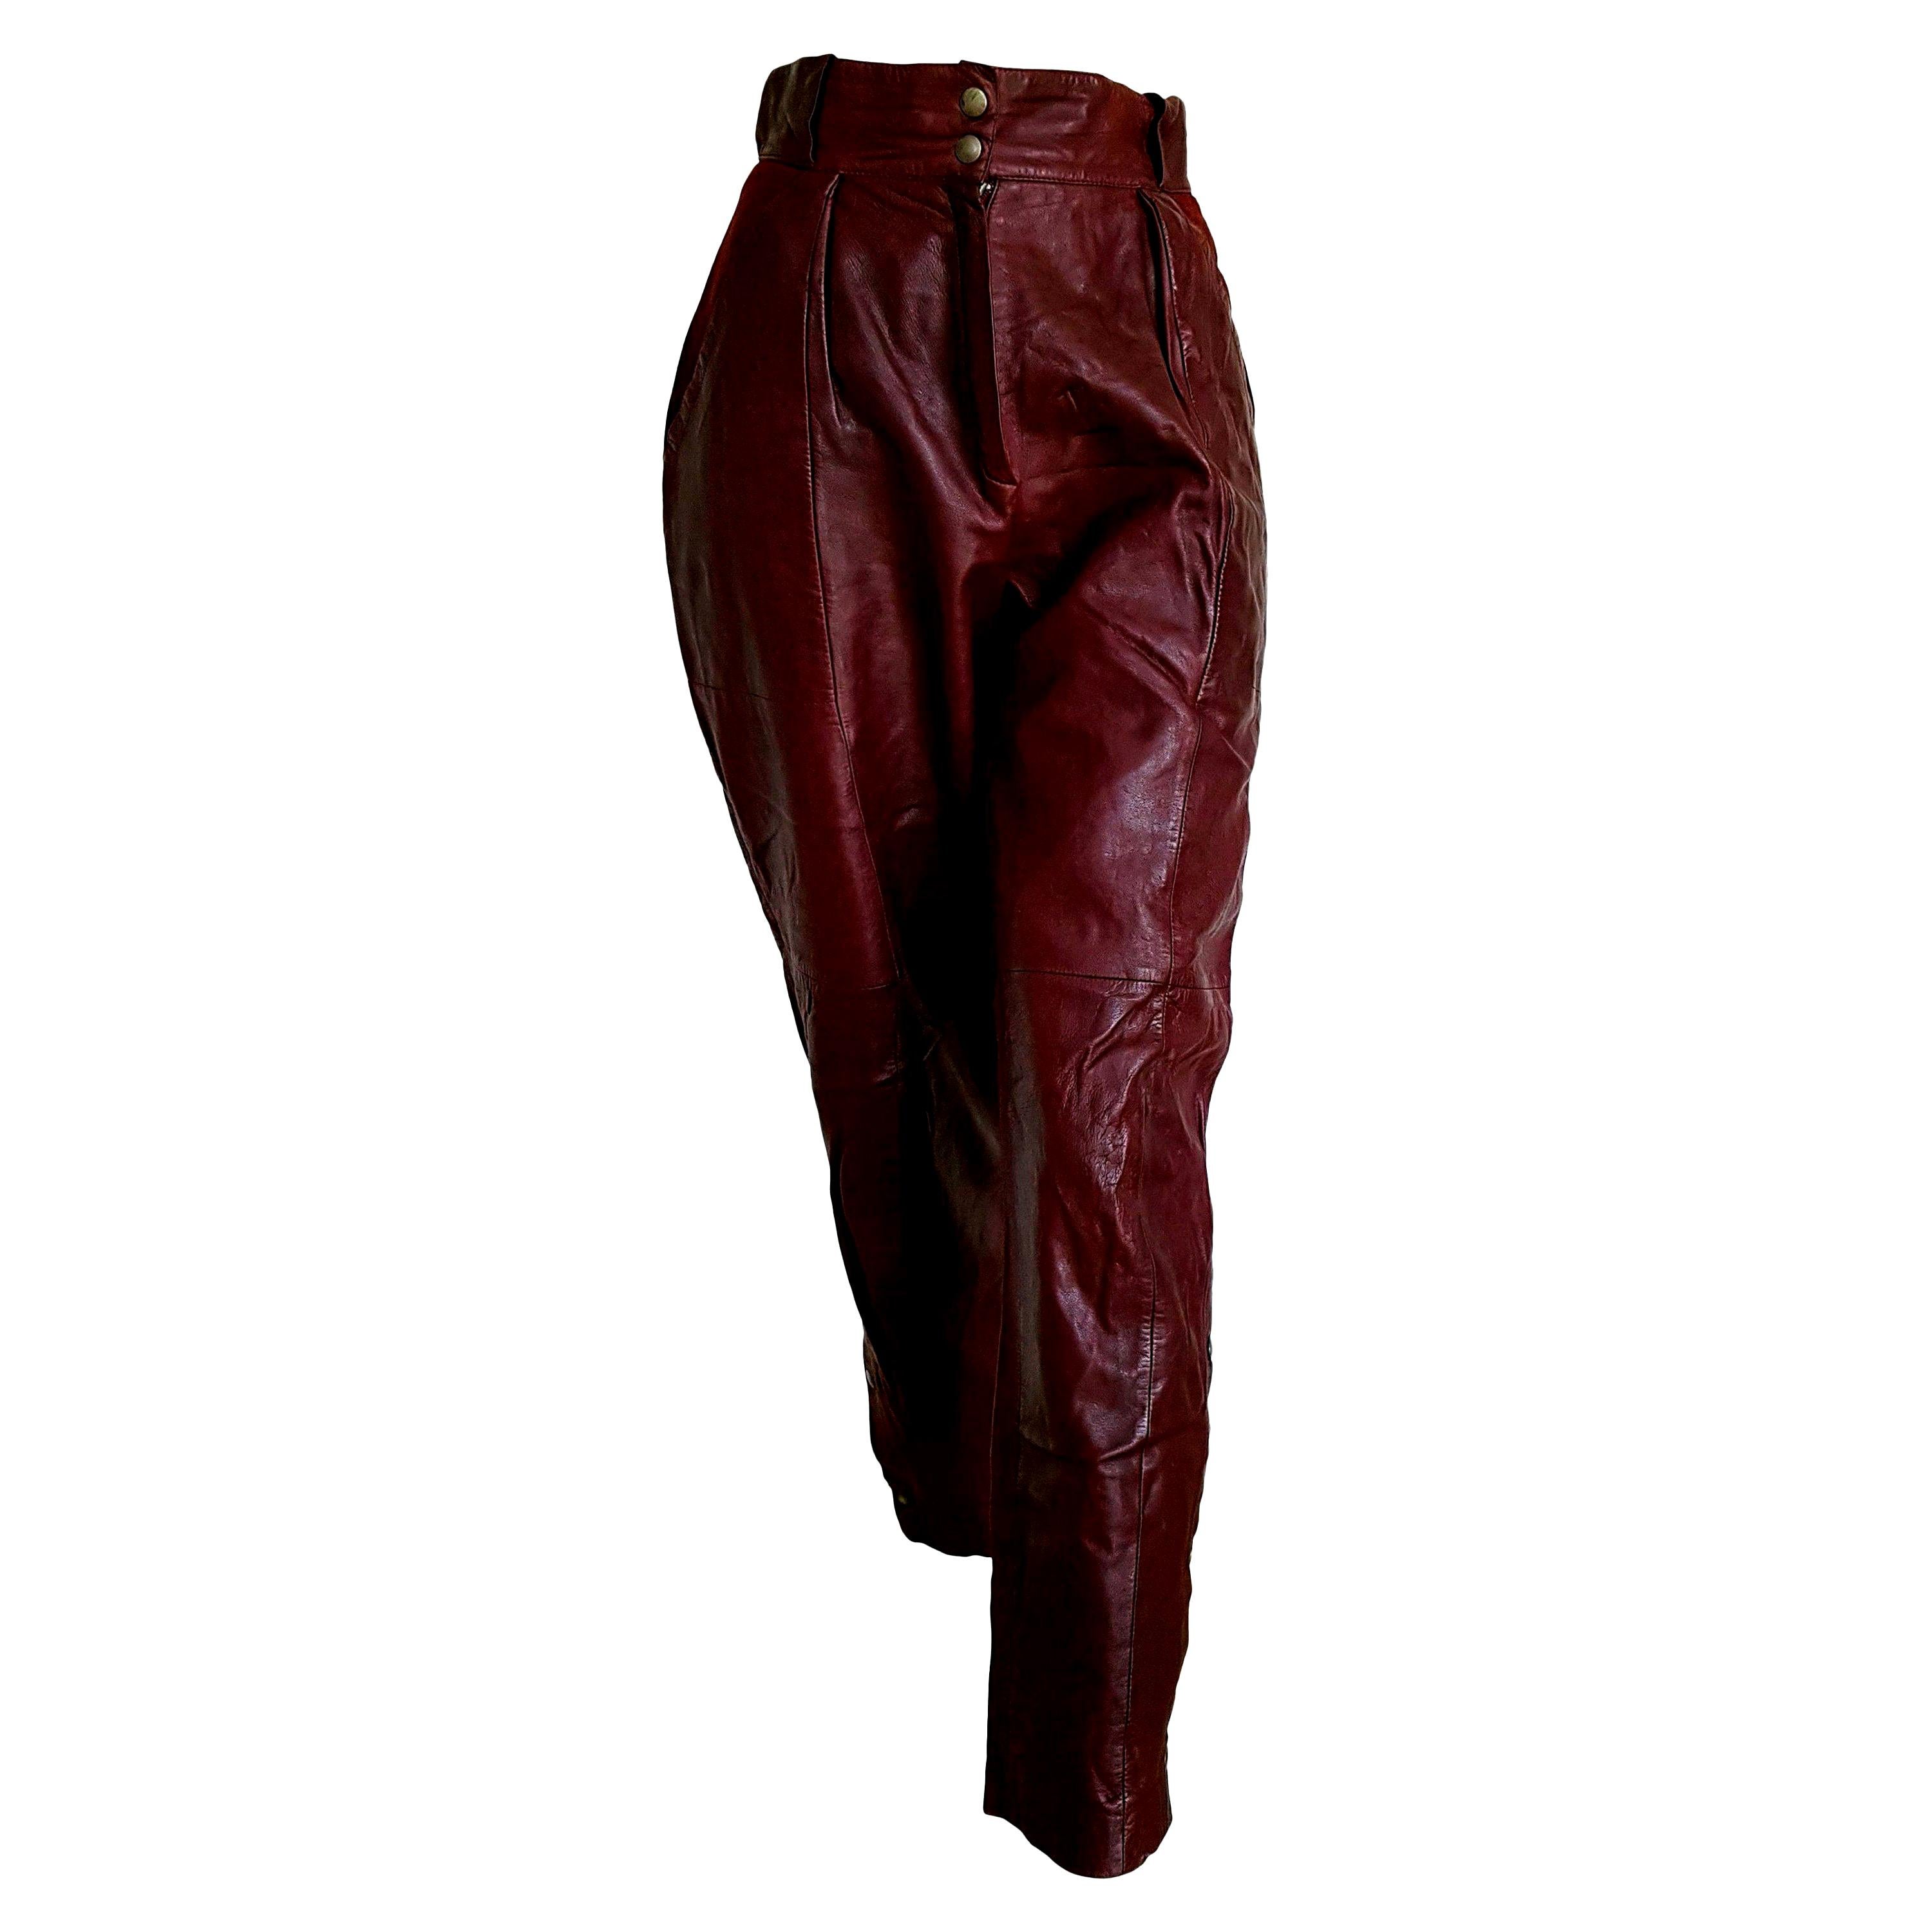 Claude MONTANA "New" Burgundy Lamb Leather Pants. Unworn. For Sale